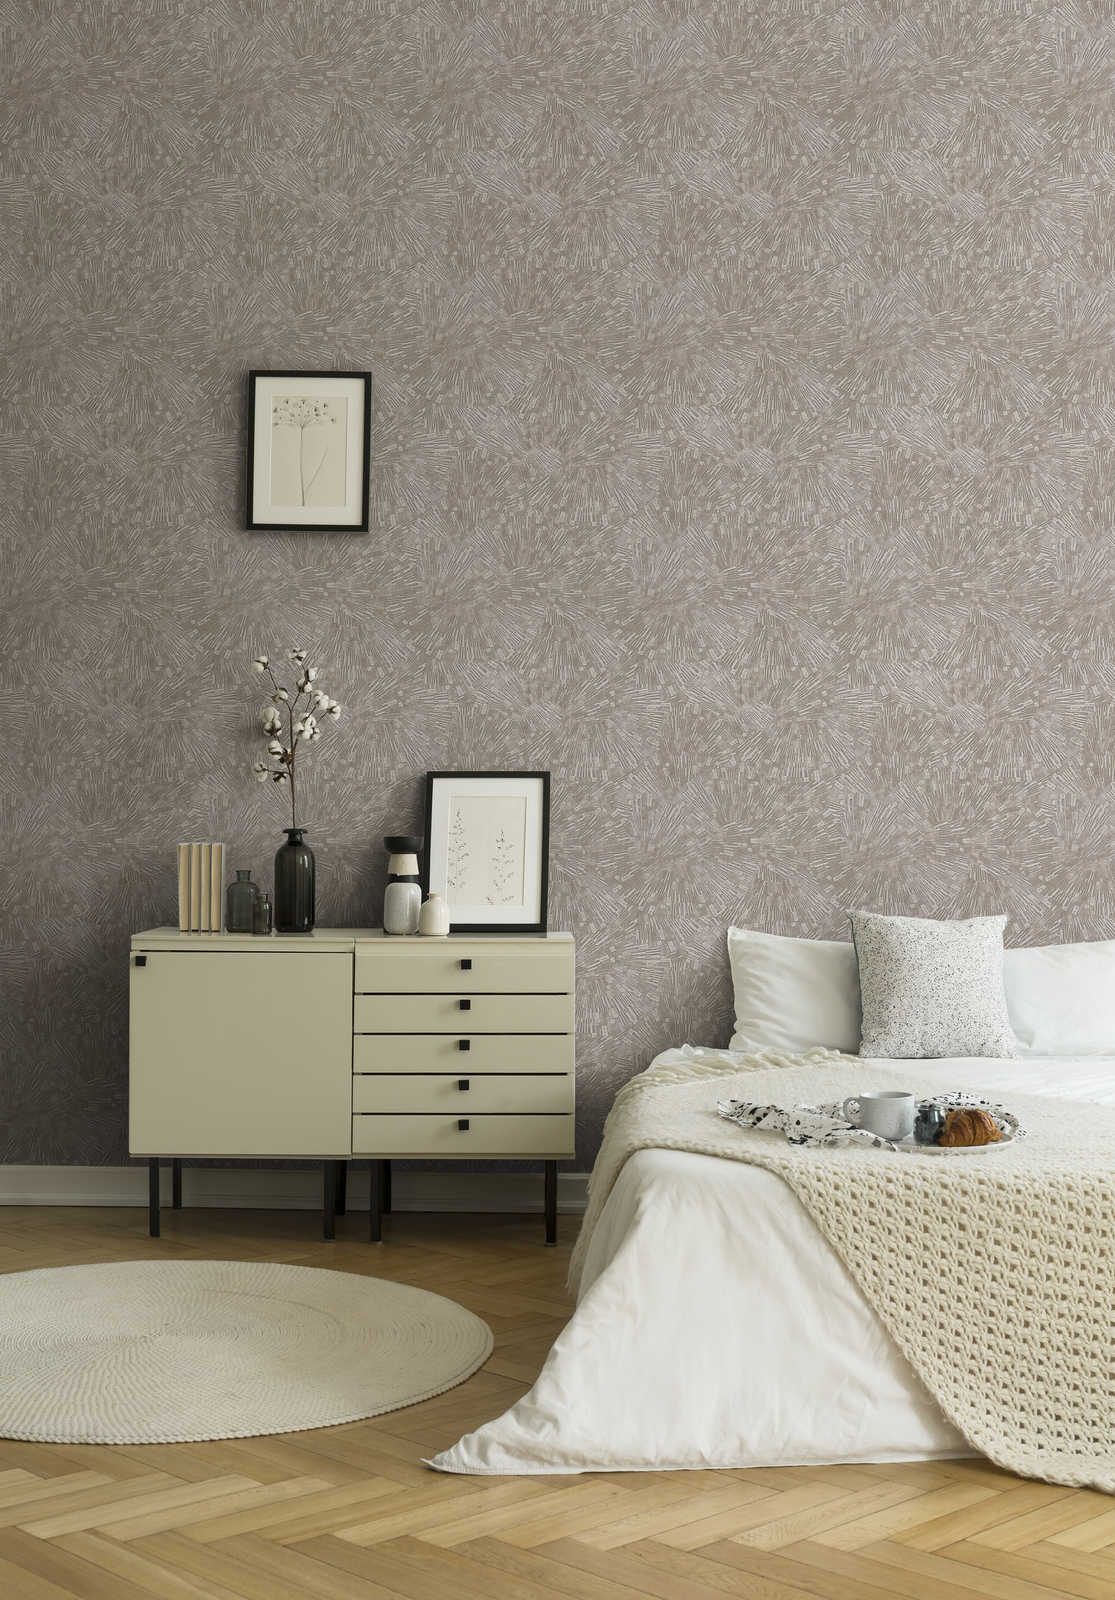             Non-woven wallpaper metallic pattern in retro style - beige, brown
        